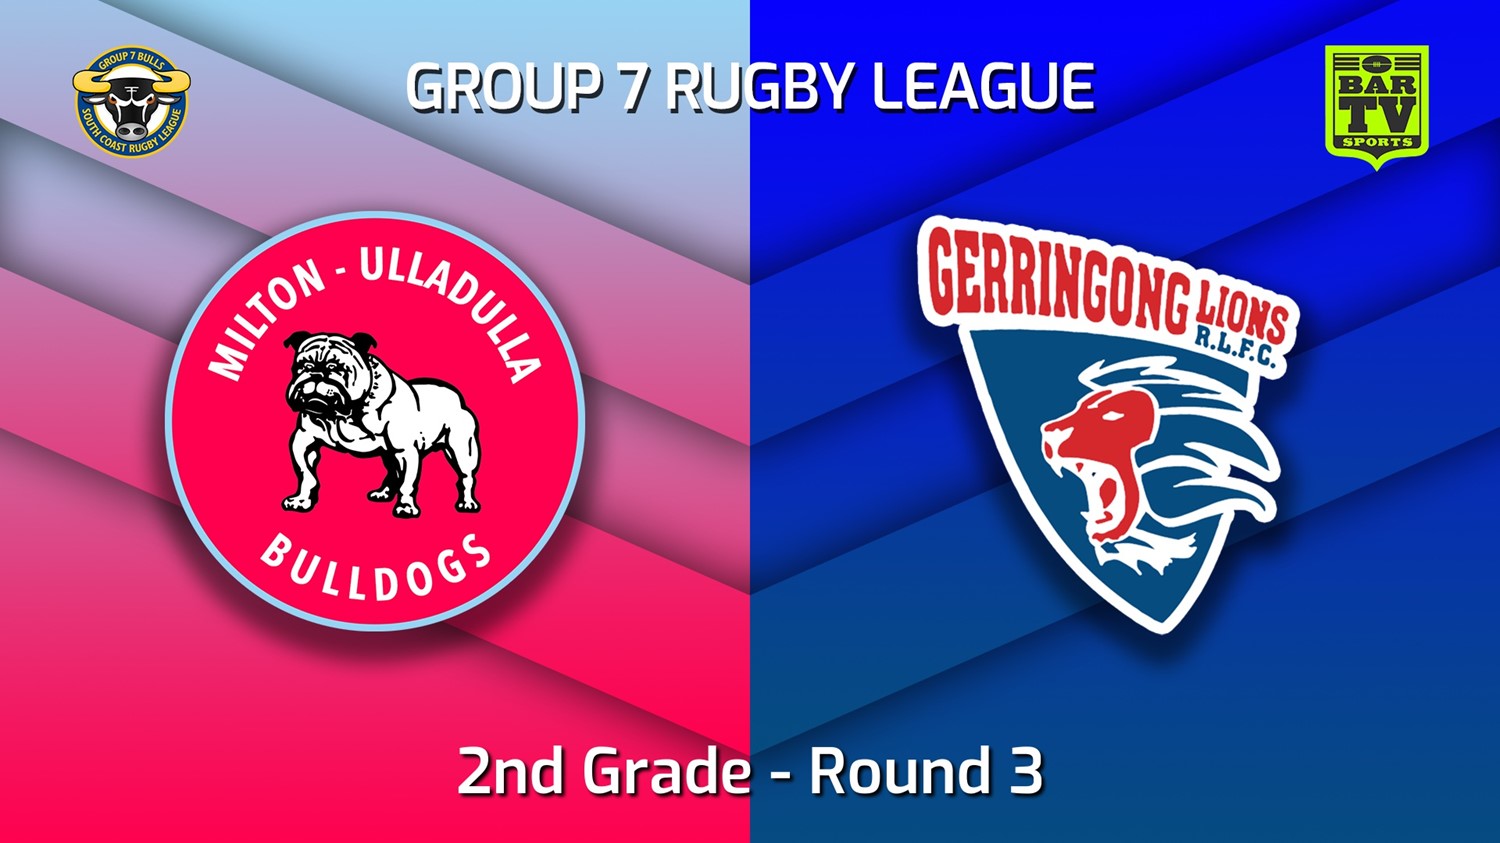 220501-South Coast Round 3 - 2nd Grade - Milton-Ulladulla Bulldogs v Gerringong Lions Slate Image